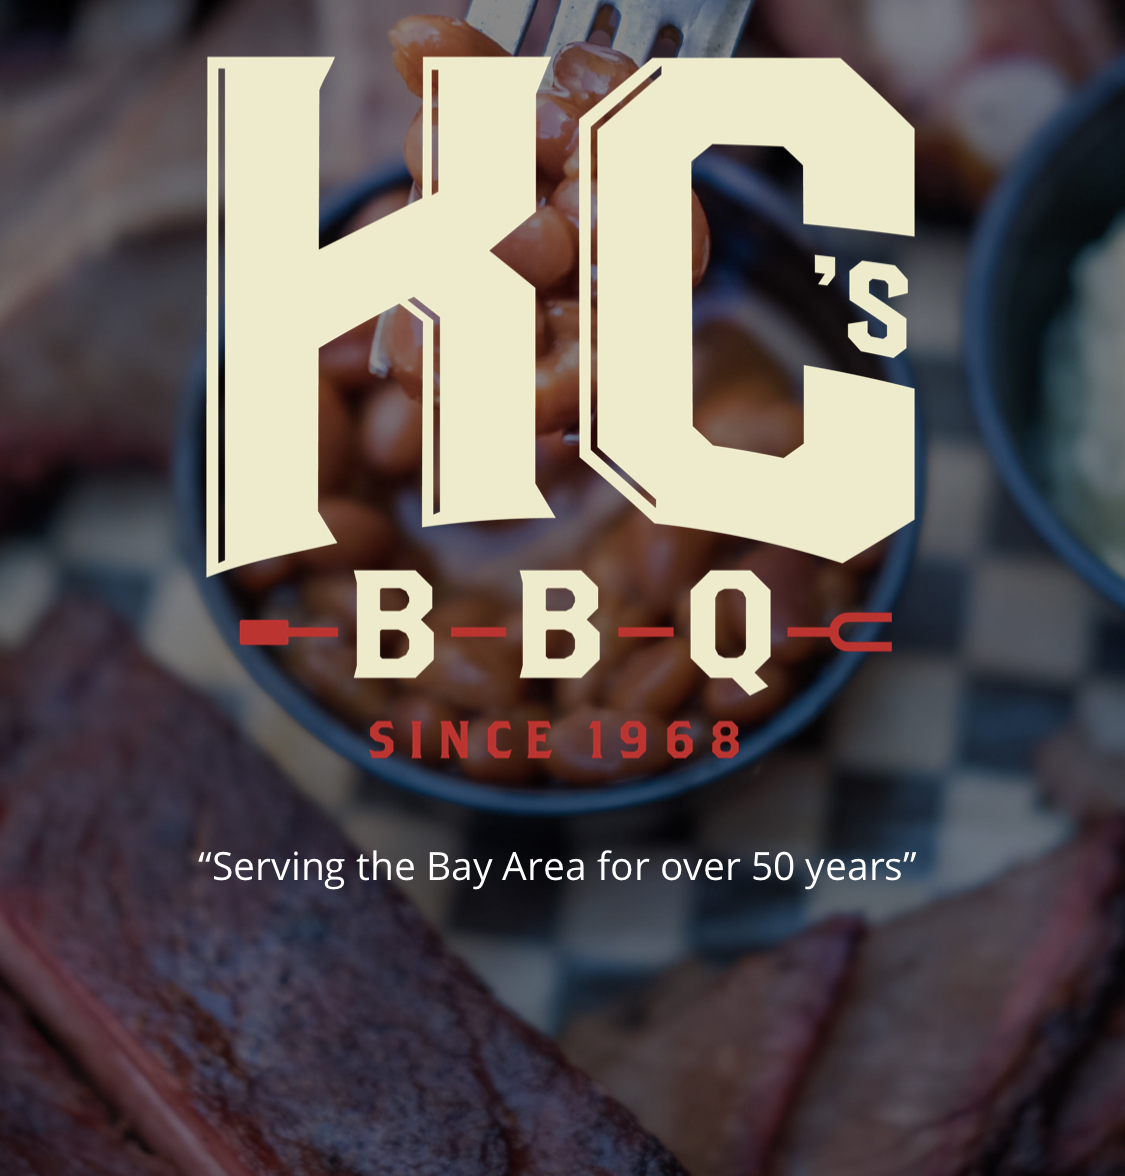 KC’S BBQ features Barbecue cuisine in Berkeley, California